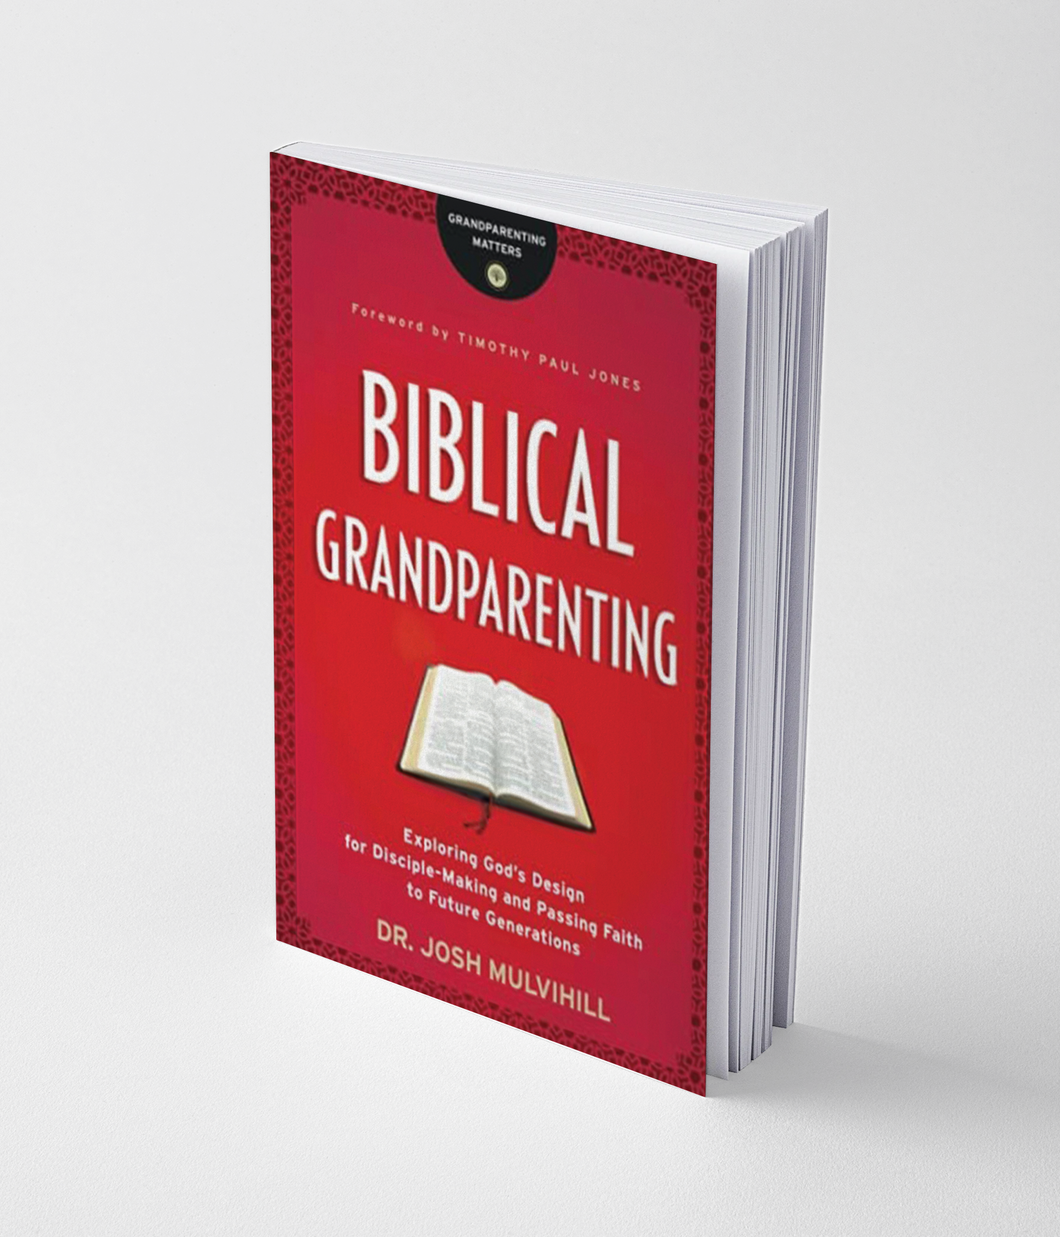 Biblical Grandparenting by Dr. Josh Mulvihill